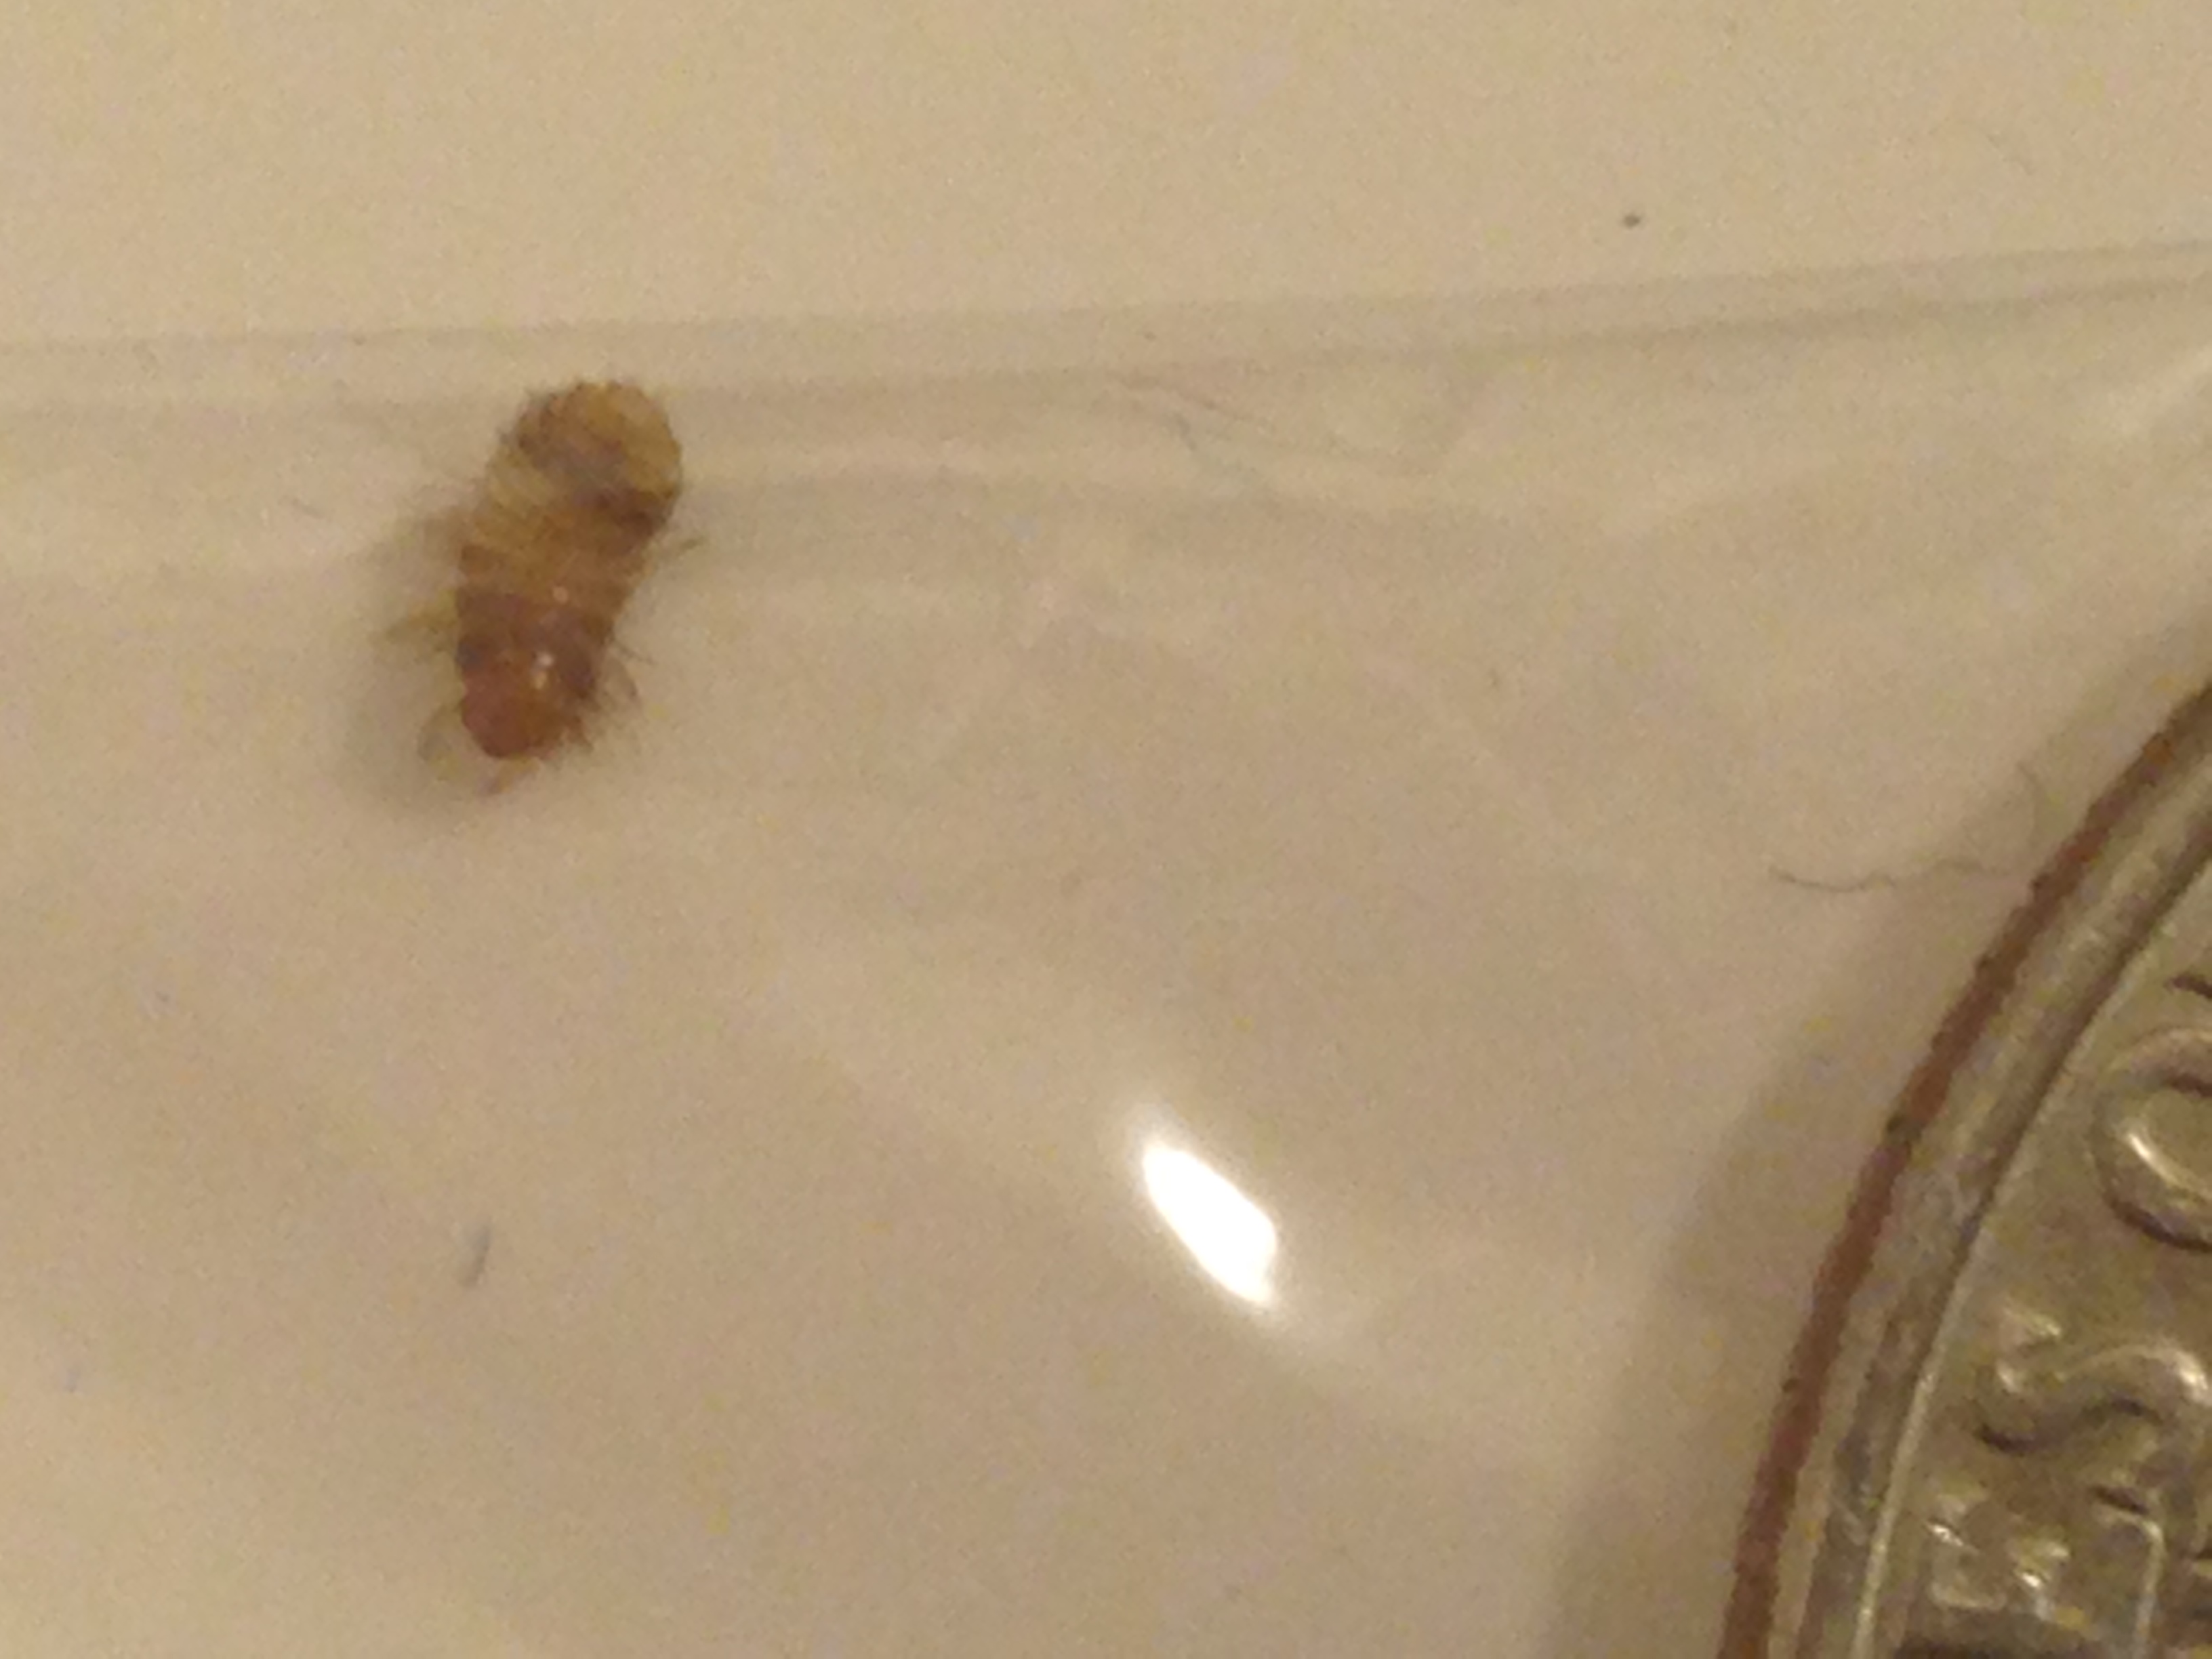 Bed Bug larvae or Carpet Beetle Larvae? [a: beetle larvae] Â« Got Bed ...